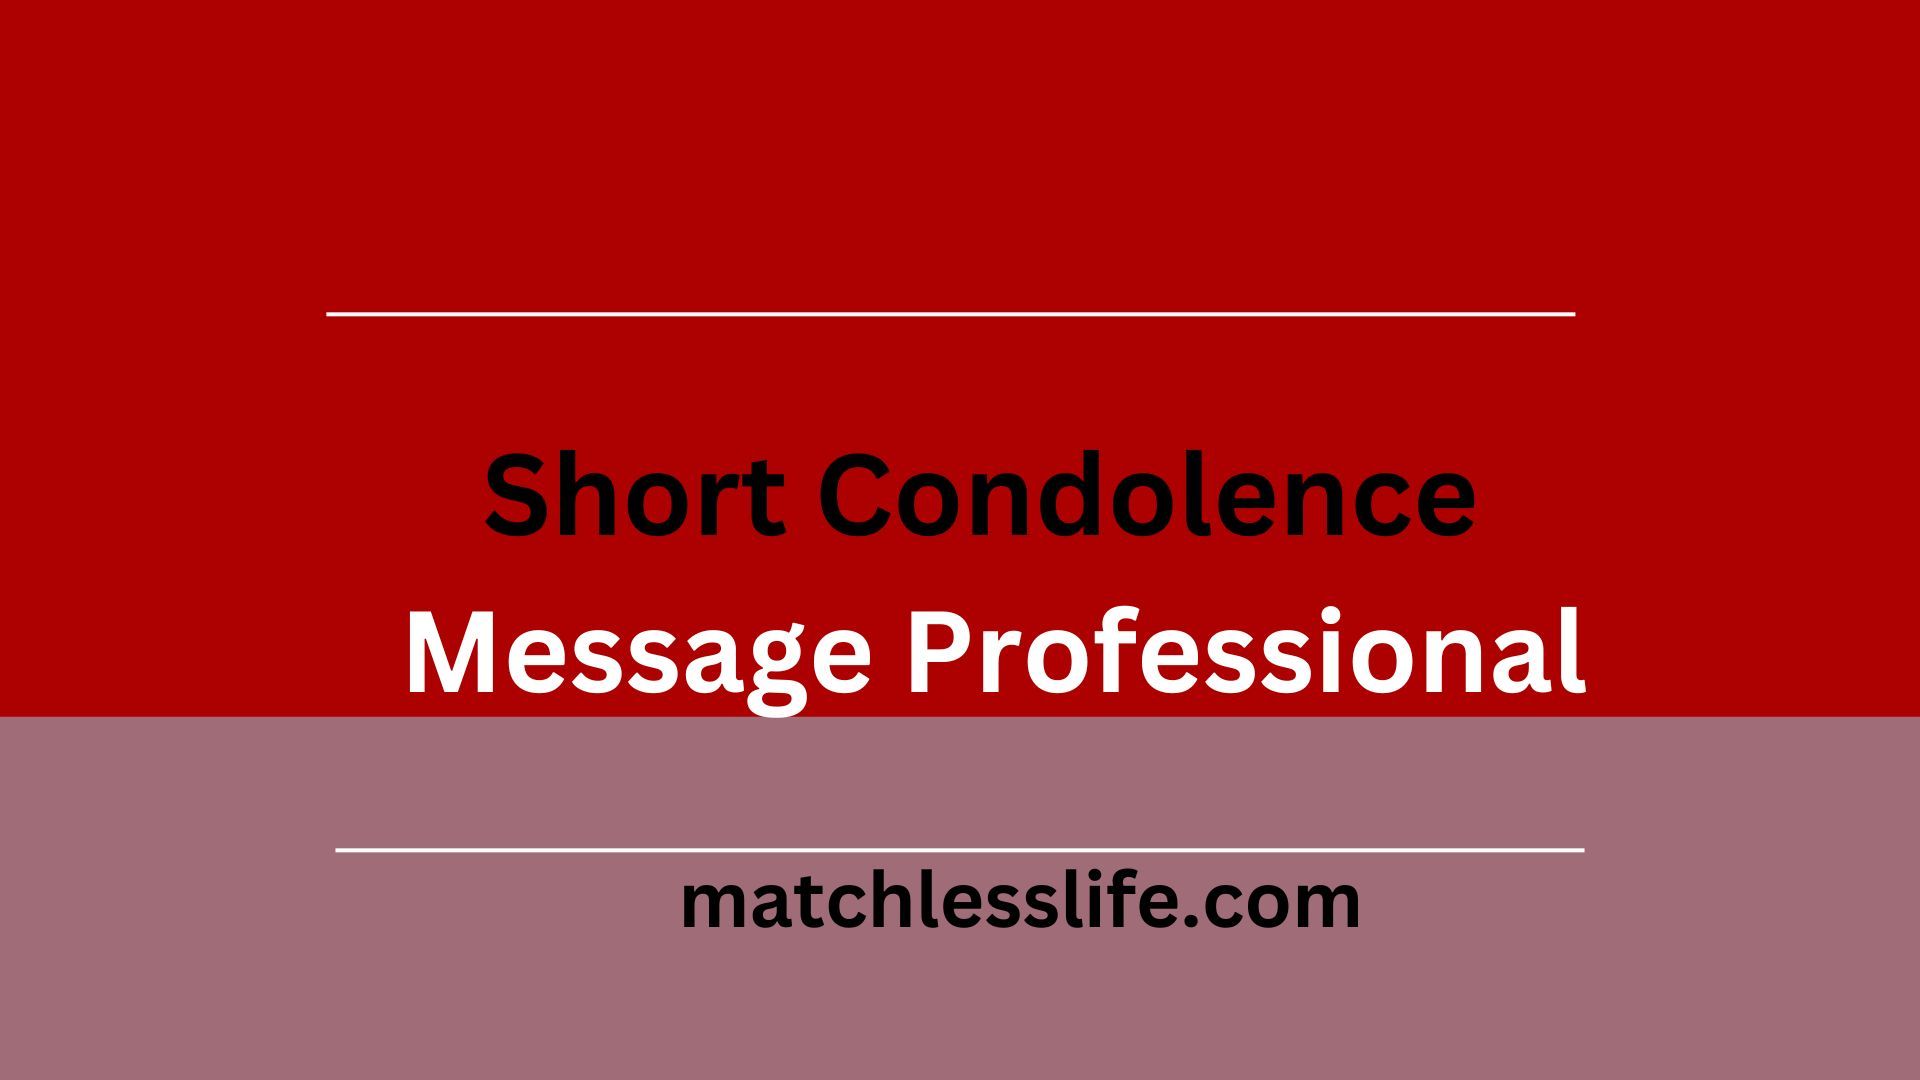 Short Condolence Message Professional